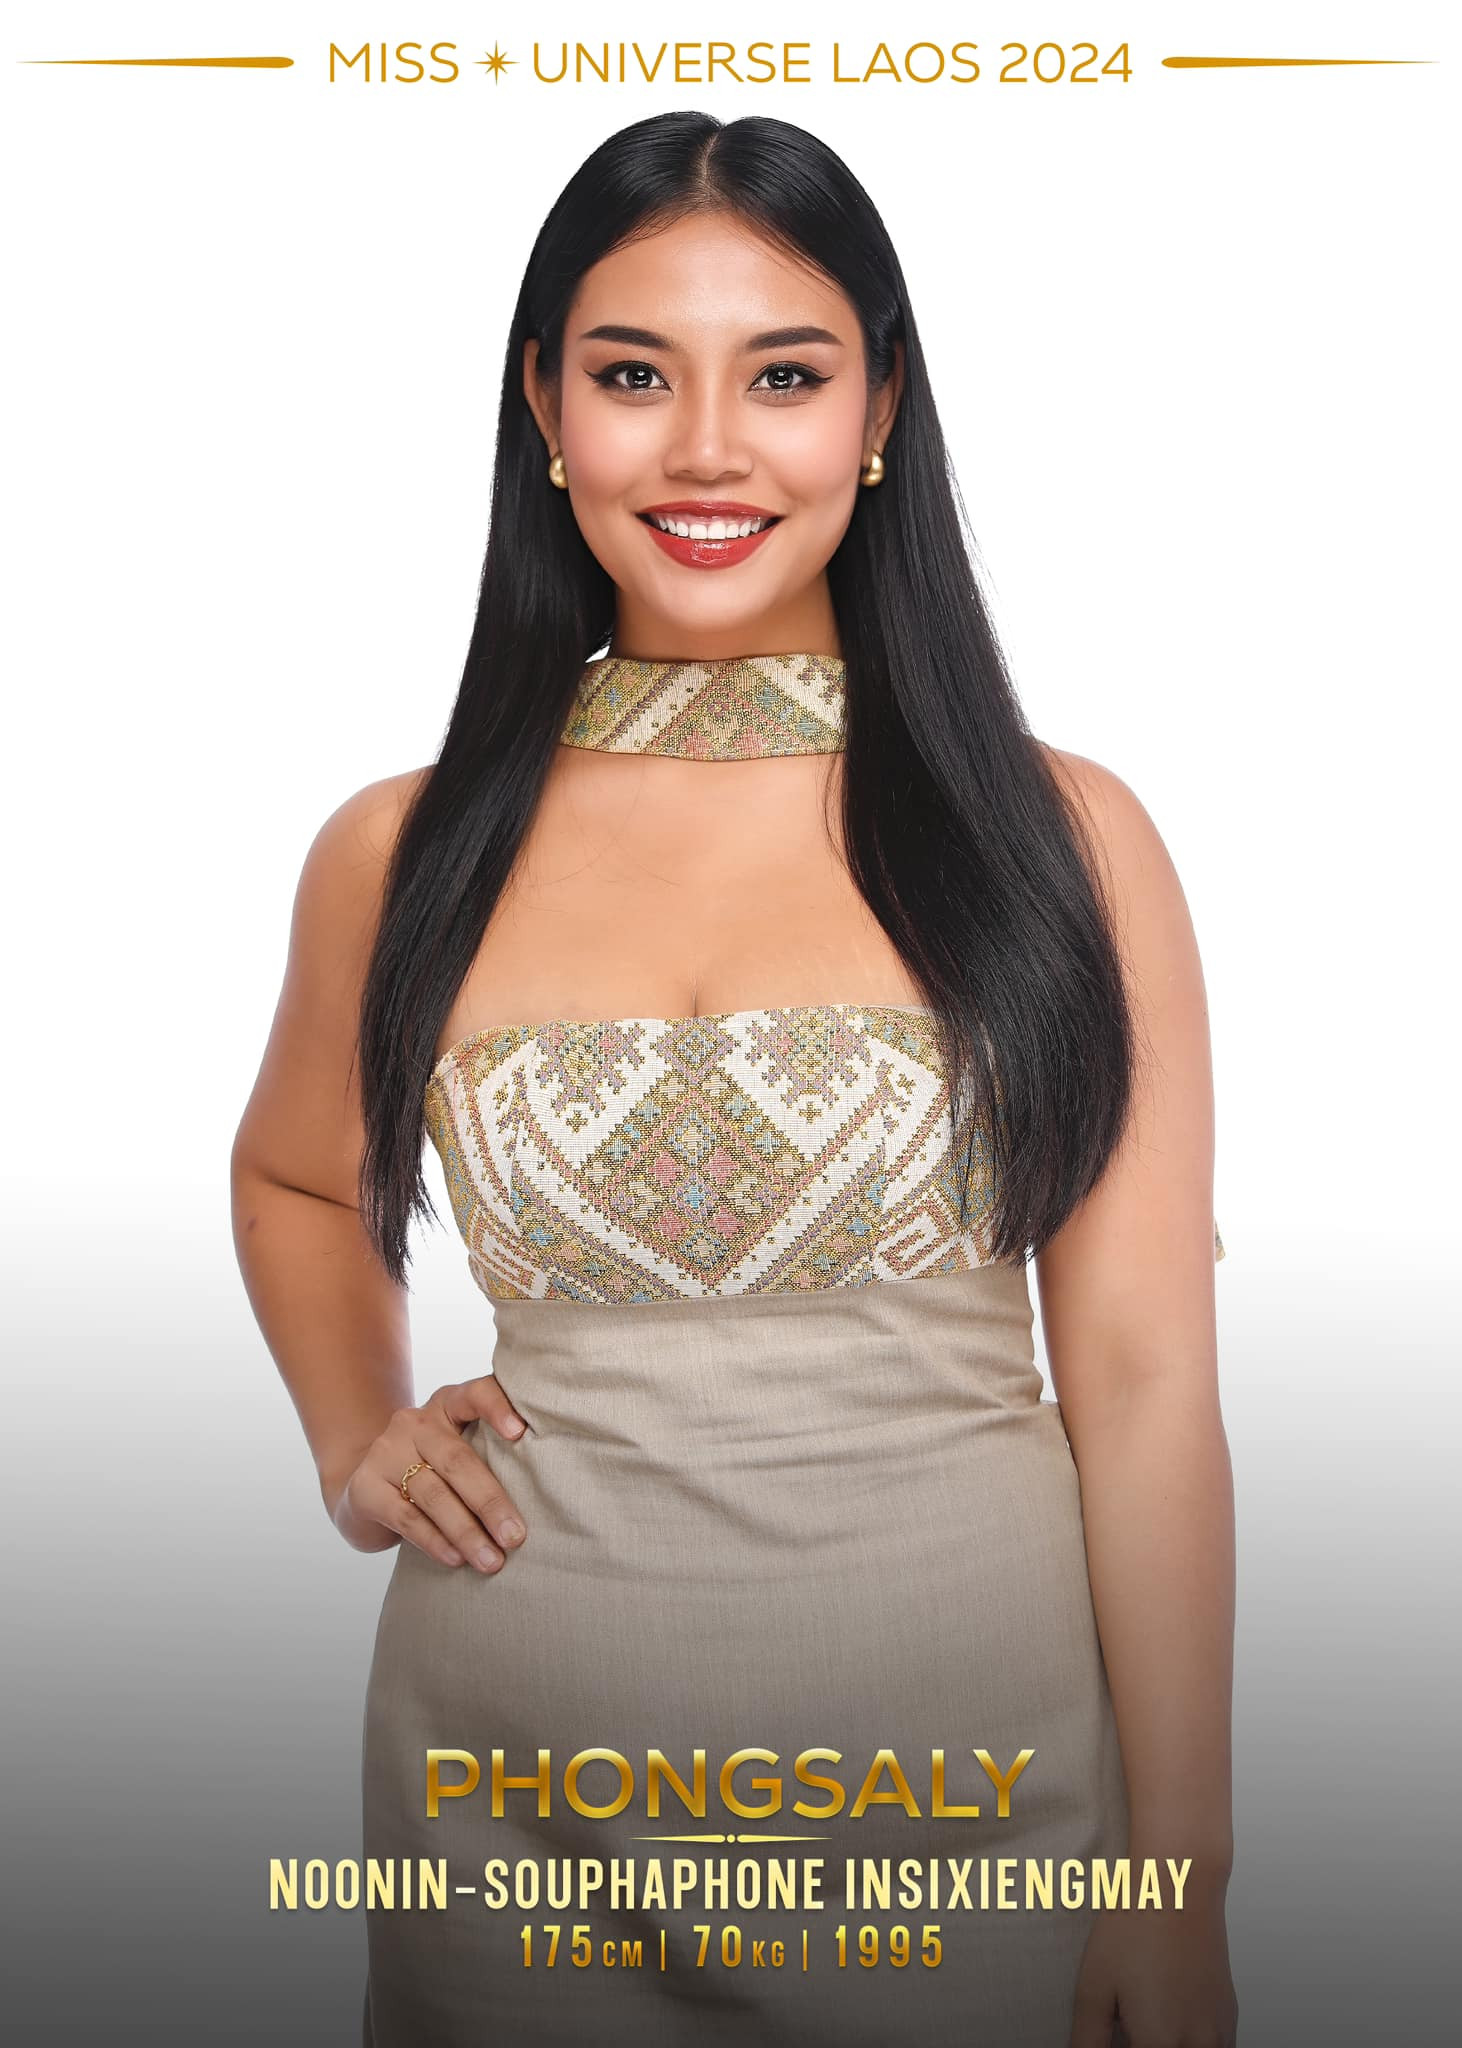 candidatas a miss universe laos 2024. final: ? JjGN89S